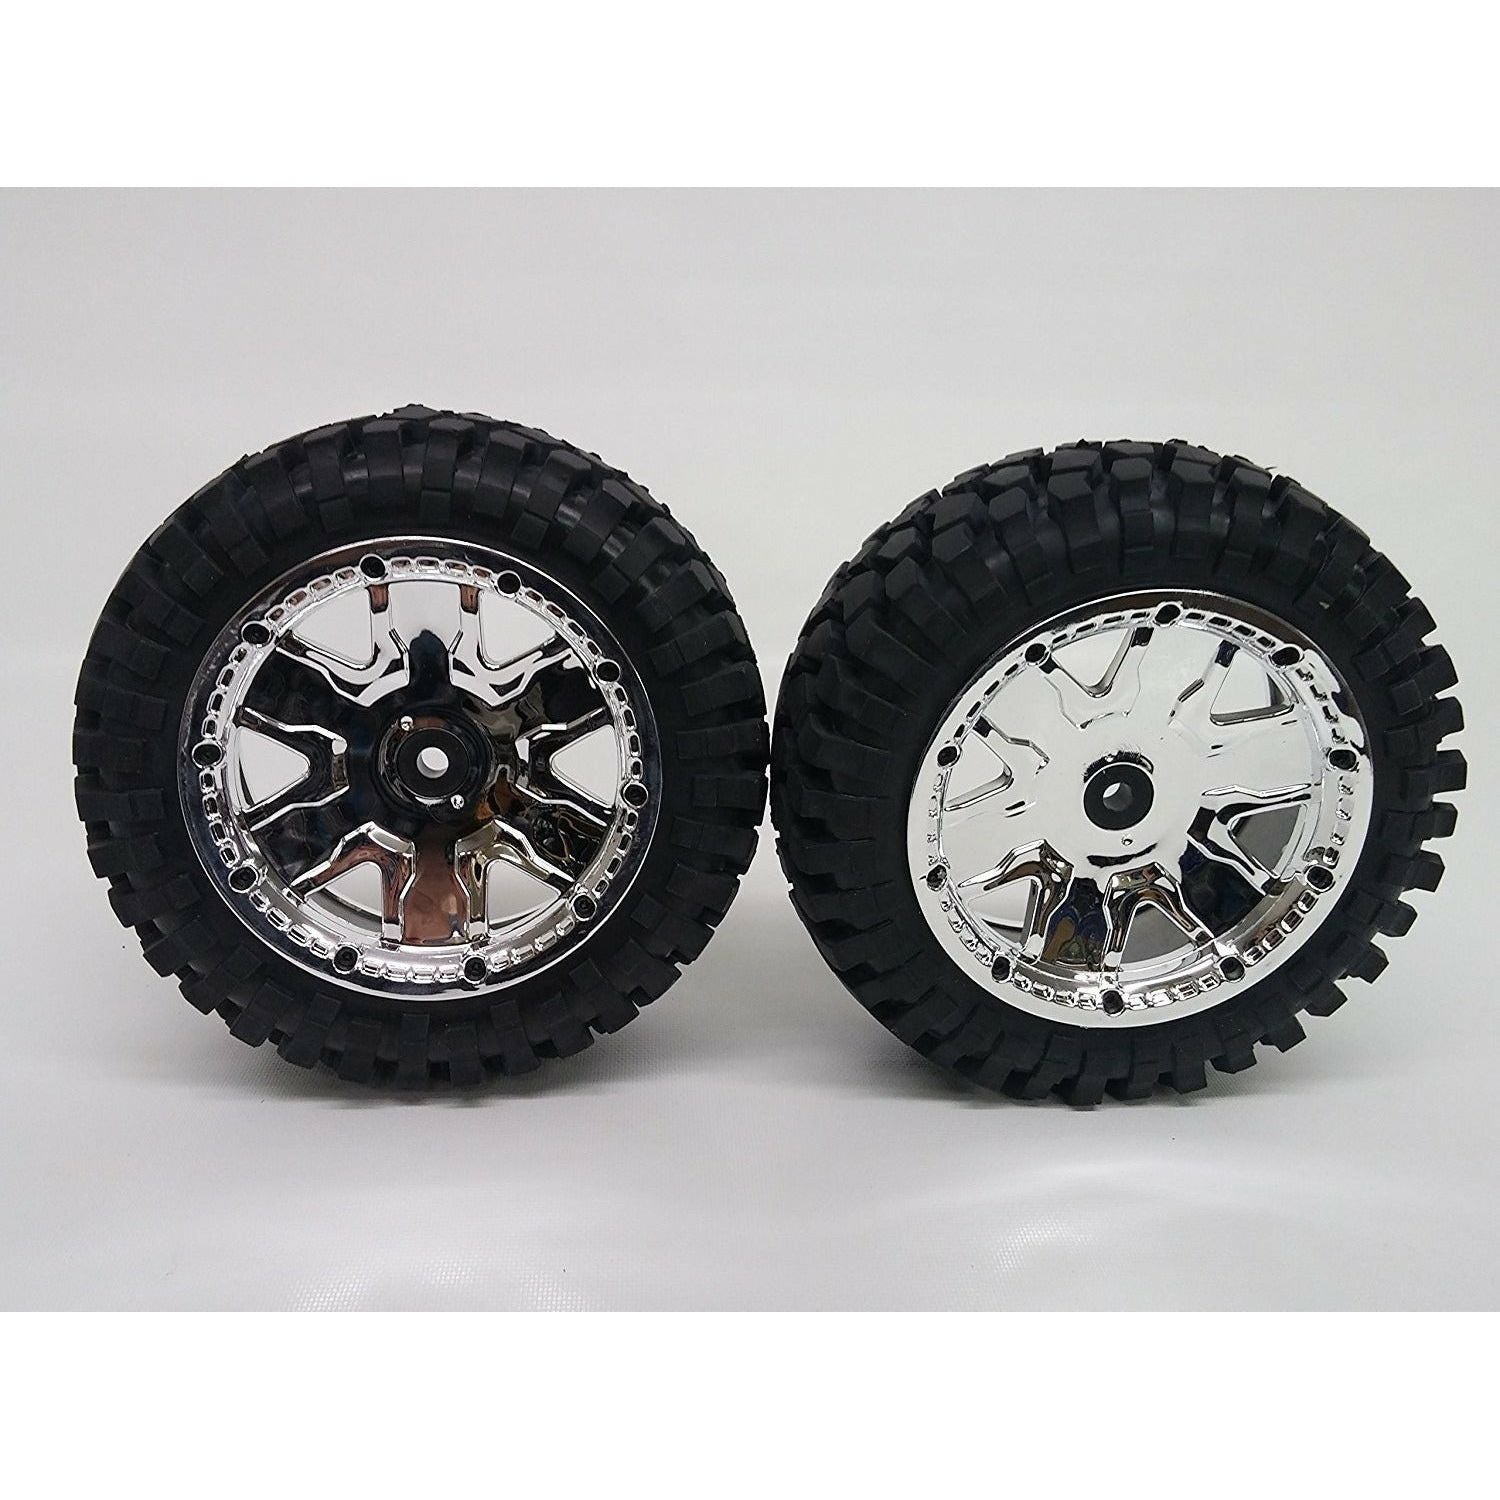 K-Rock Tires & Yuma Rims with Beadlocks - Front (1 Pair) (Choose Color)